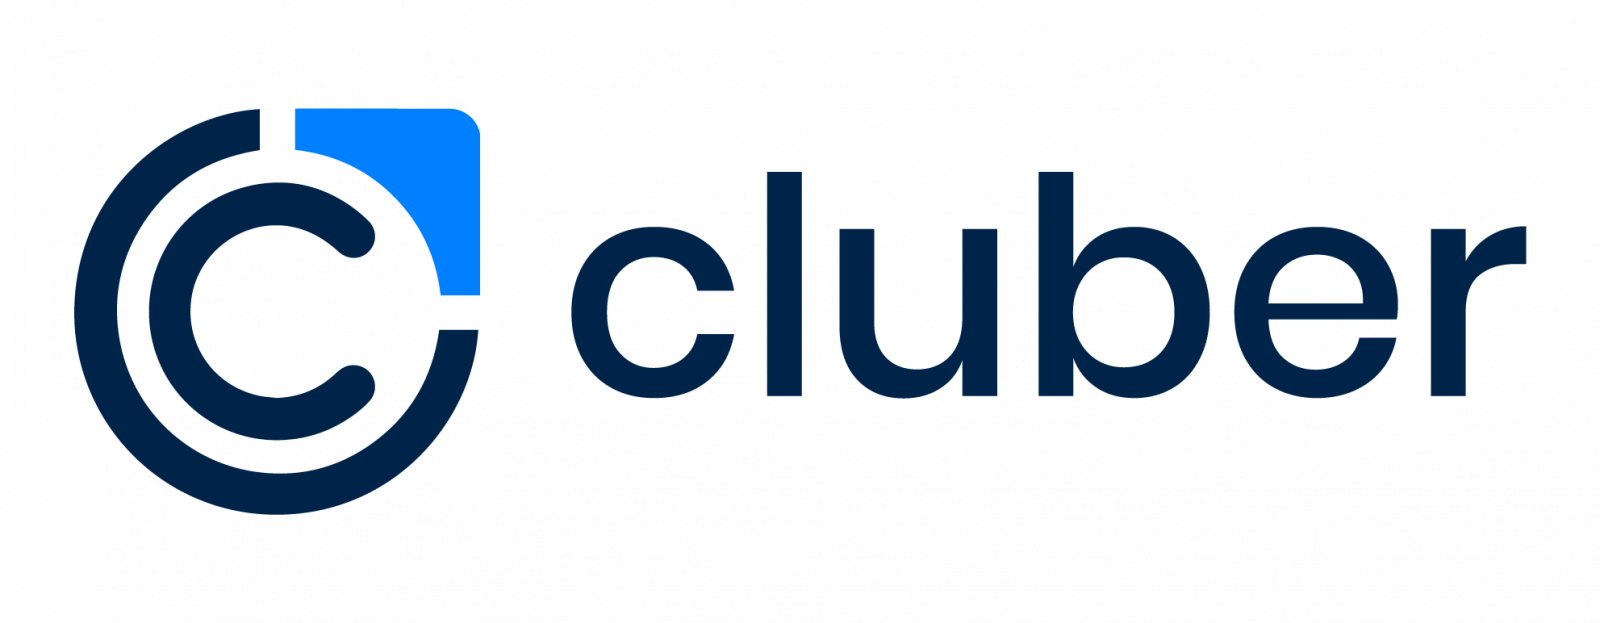 cluber_logo